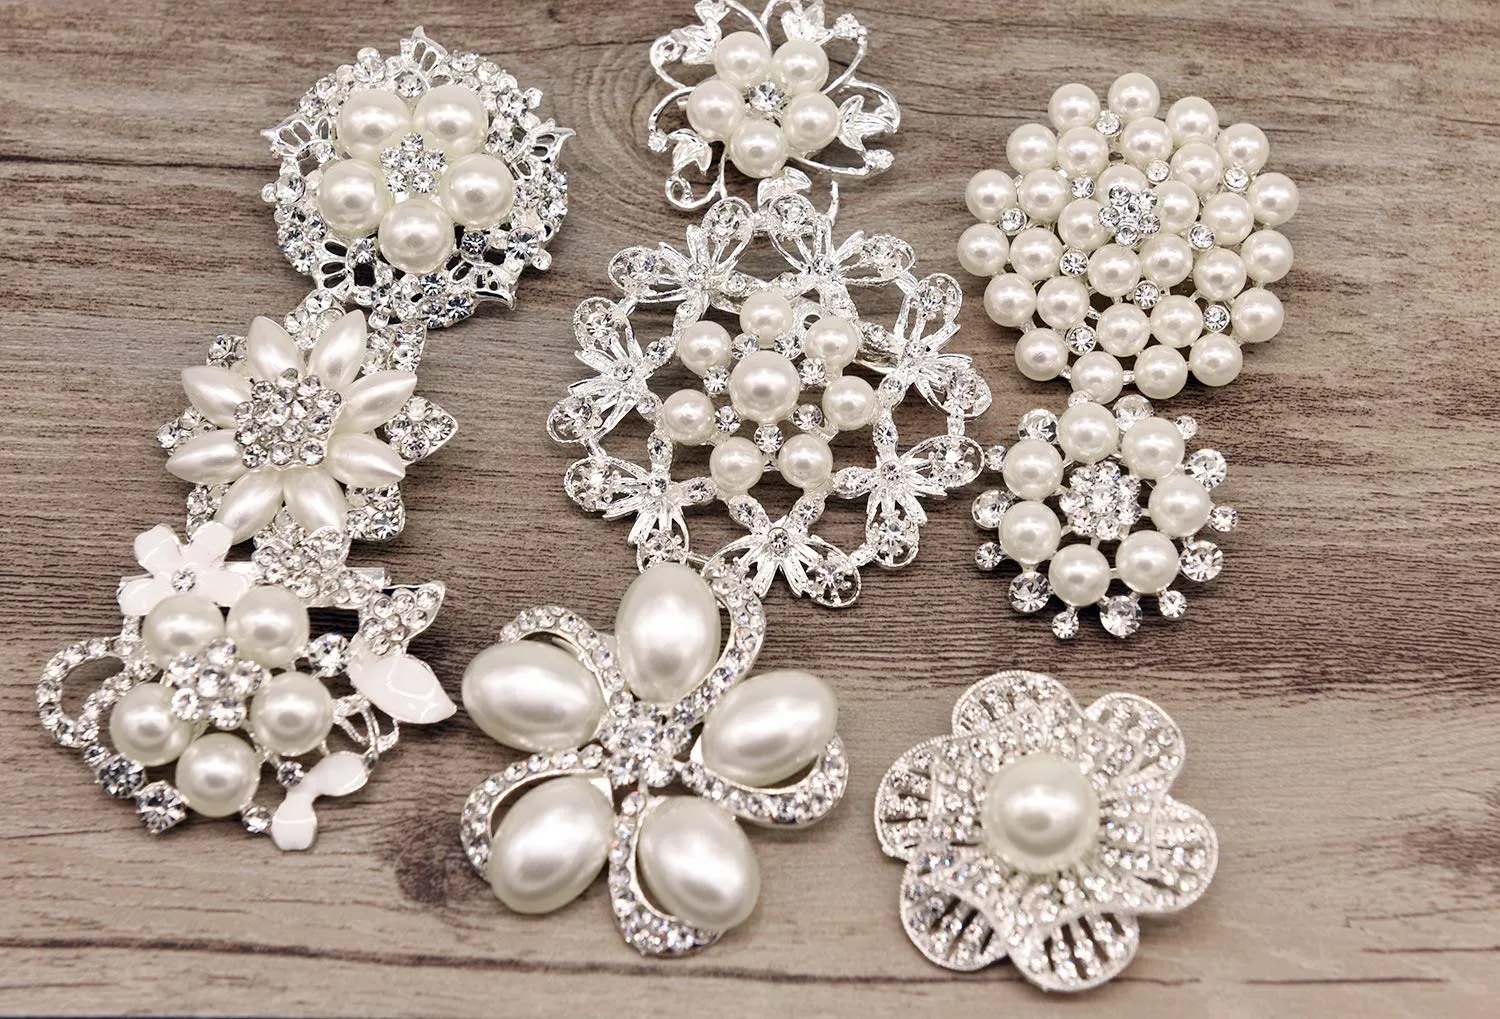 silvertone rhinestone brooches big pearl crystal wedding bouquet kit set wholesale lot set pins fashion women girl flower clear brooch